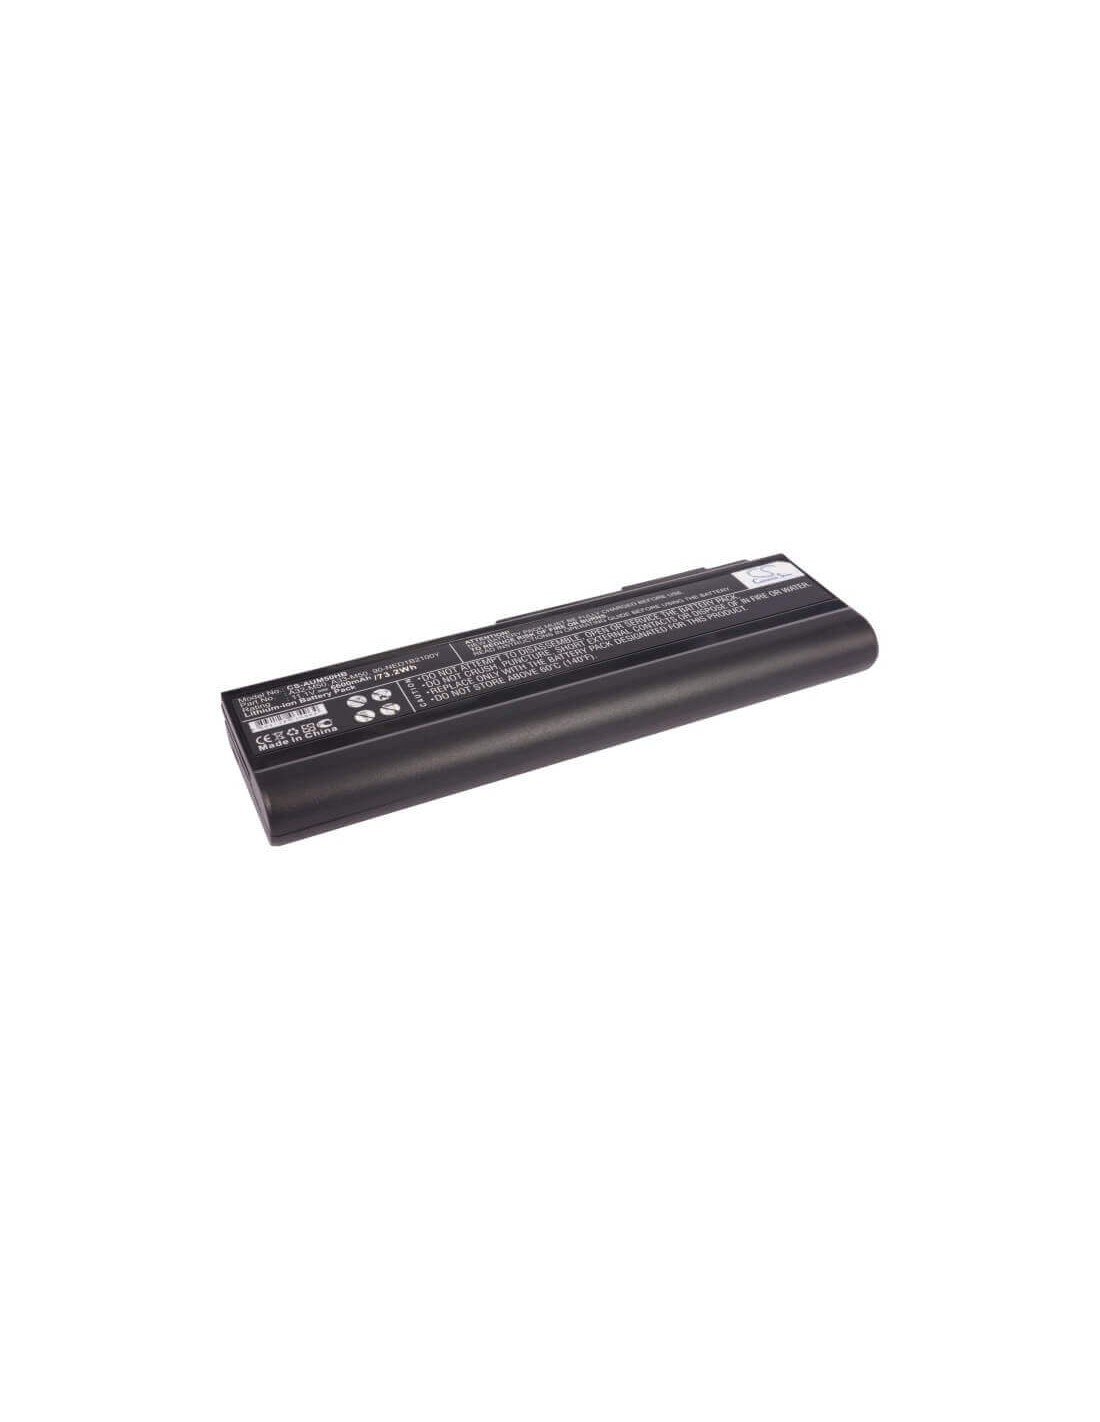 Black Battery for Asus M50, M51, M50s 11.1V, 6600mAh - 73.26Wh